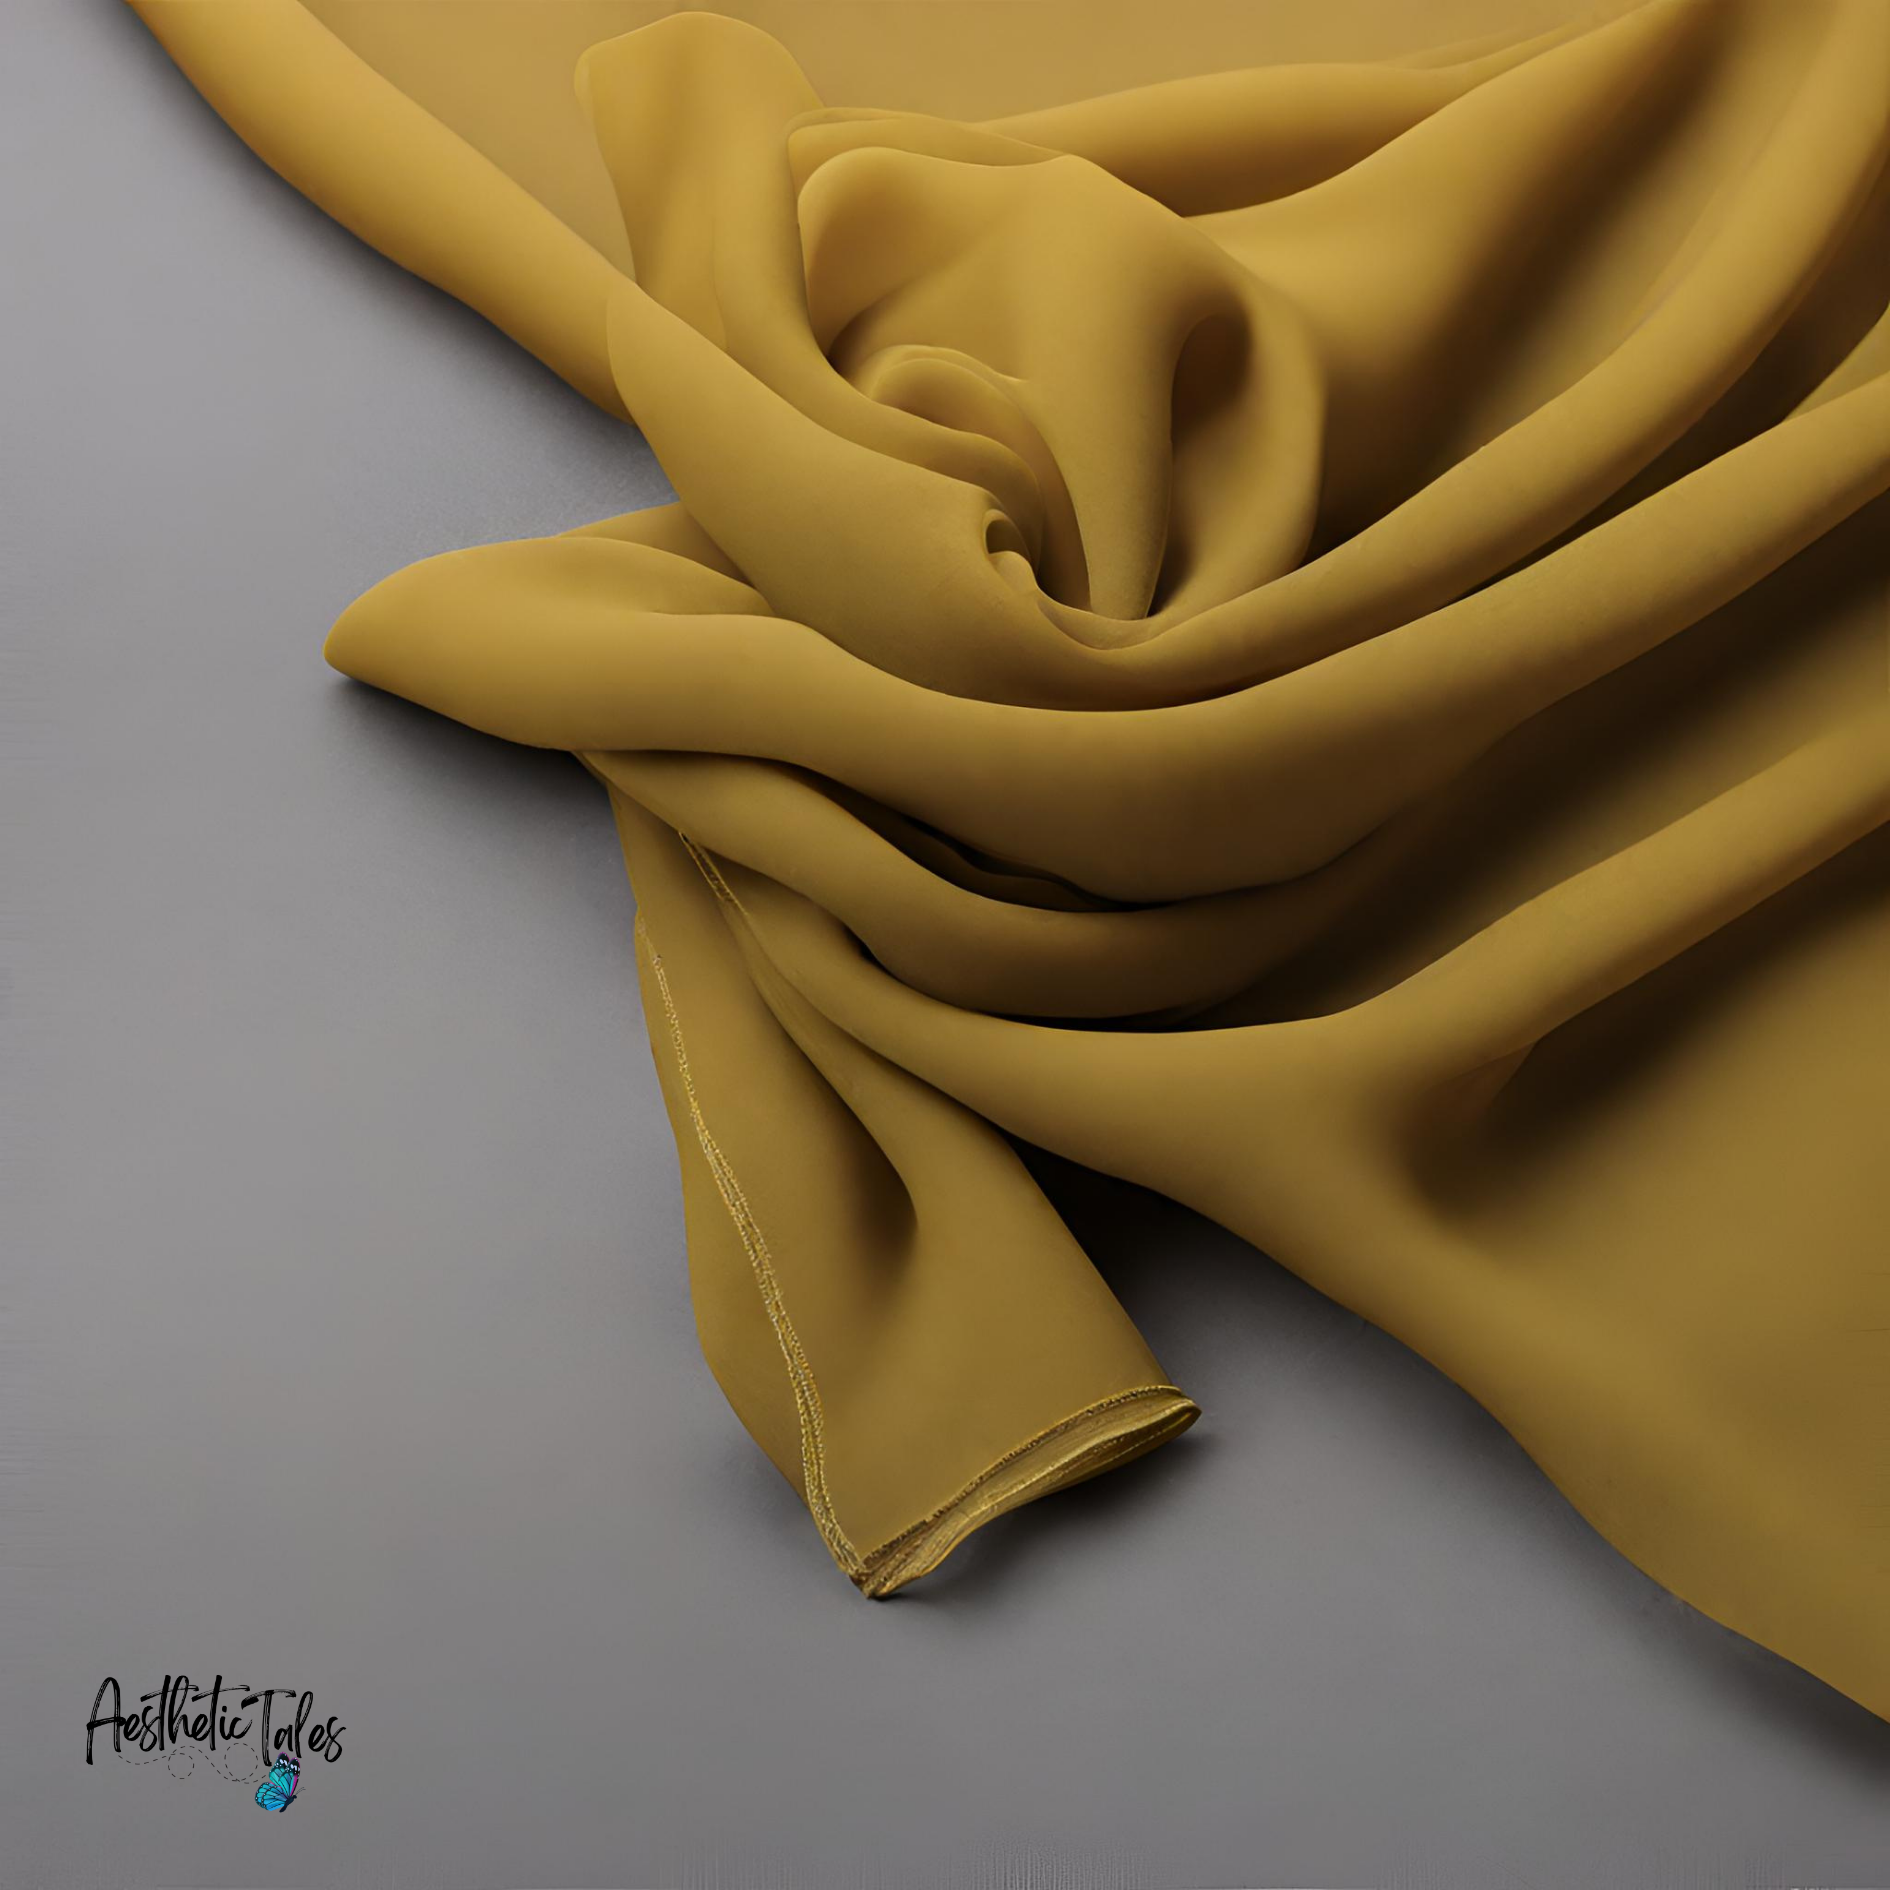 Premium Chiffon Hijab - Yellow